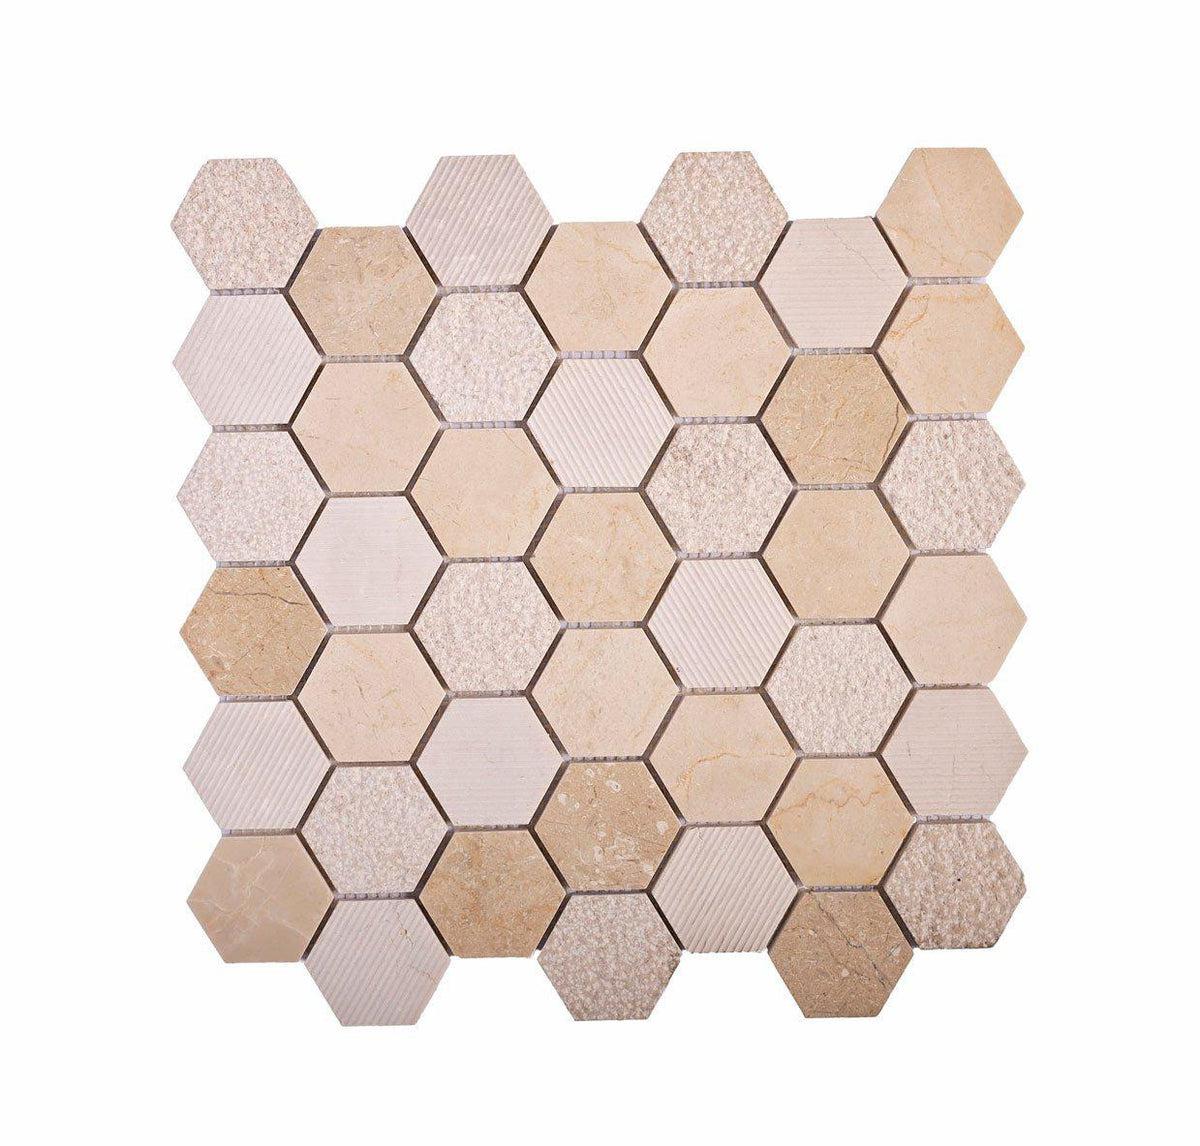 Hexagon Tile Texture|Honeycomb Ceramic Tile